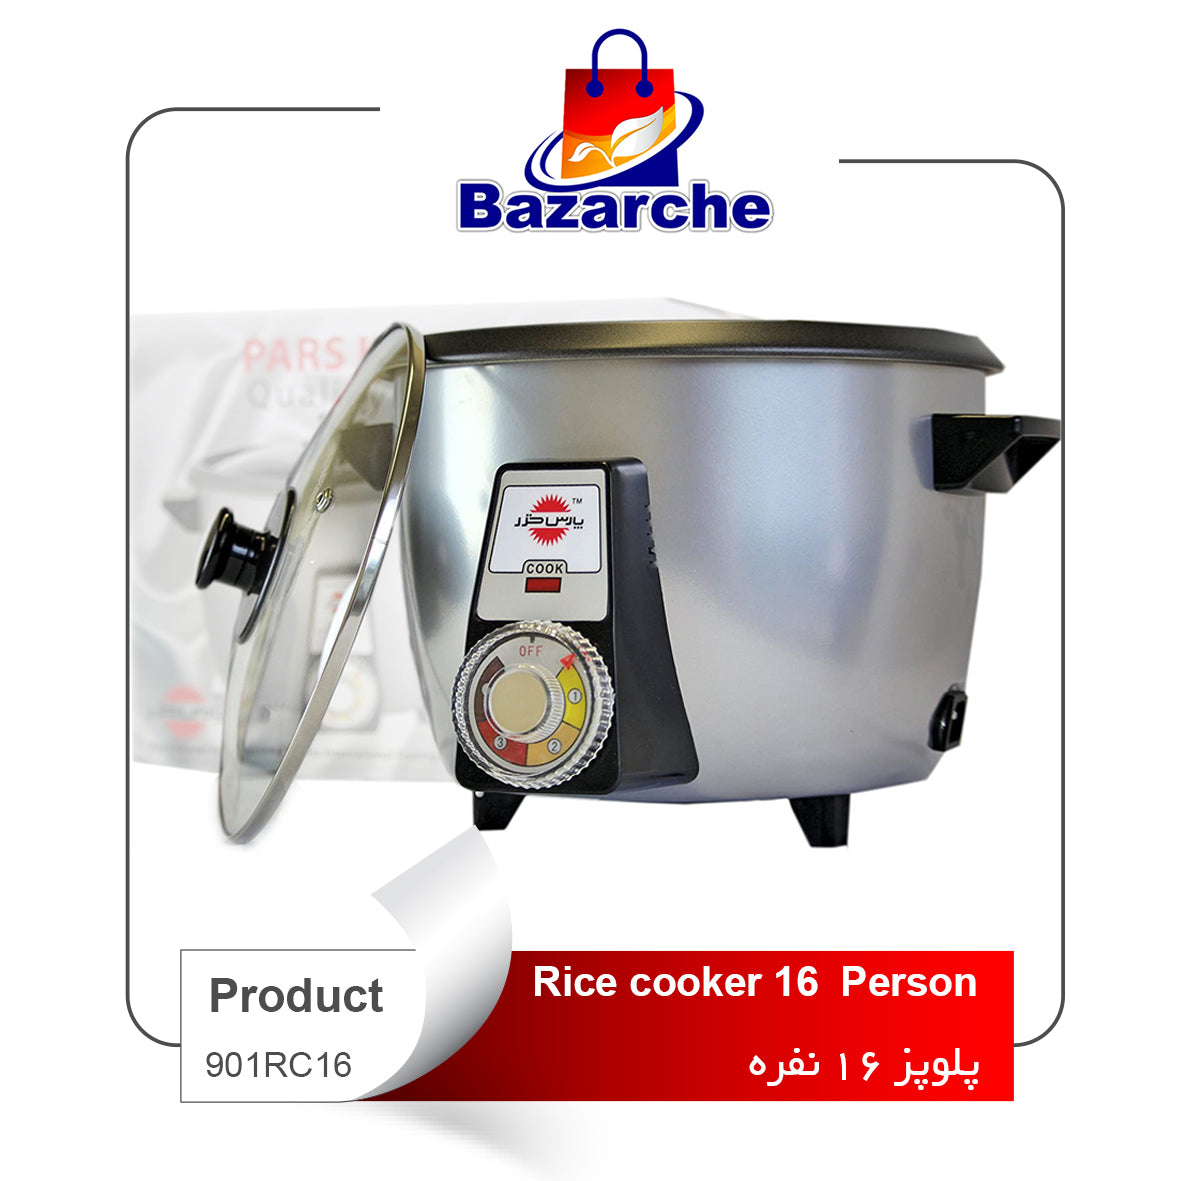 Rice cooker 16 Person(پلوپز۱۶نفره) – BAZARCHE